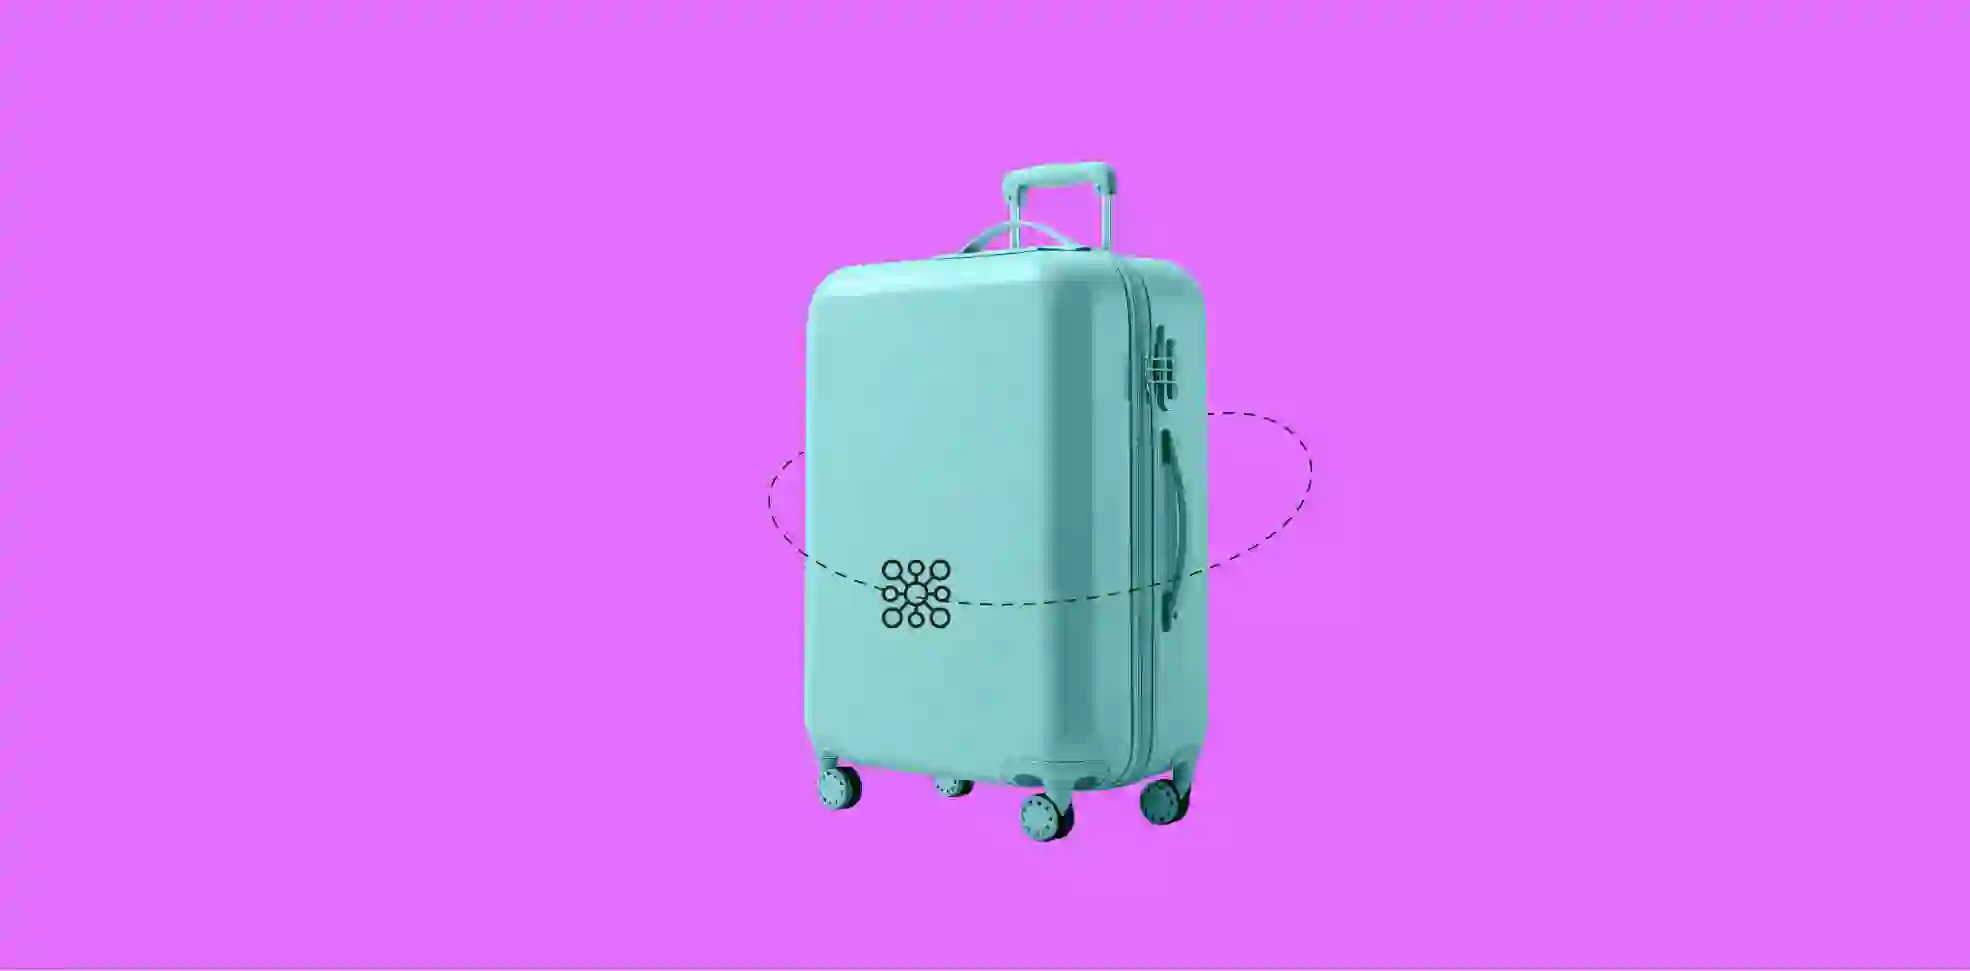 suitcase on wheels on purple background